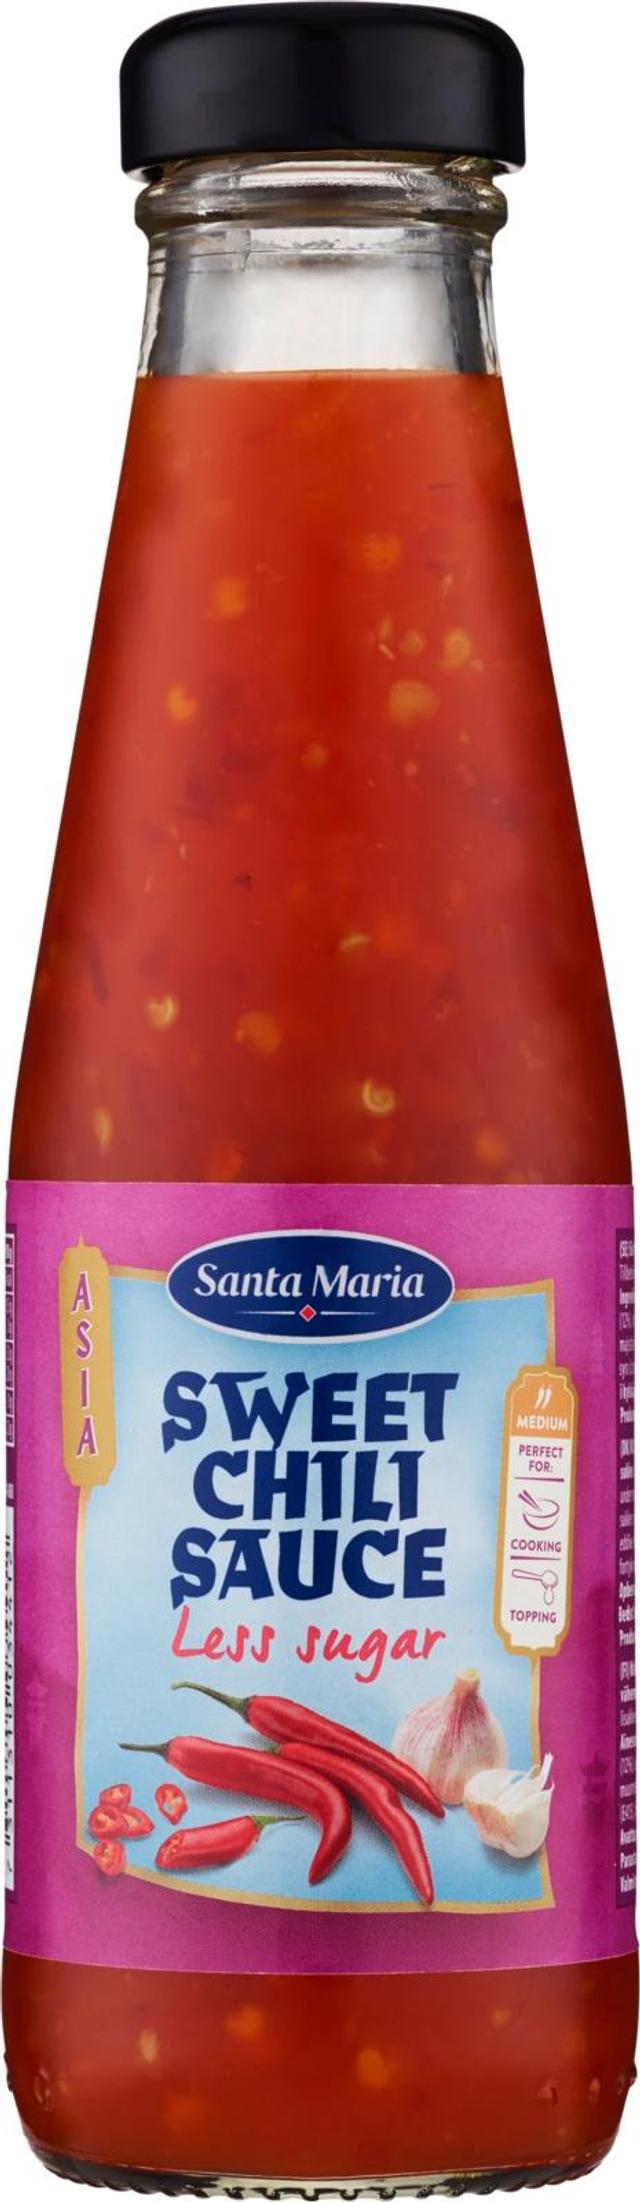 Santa Maria 200ML Sweet Chili Sauce Less Sugar